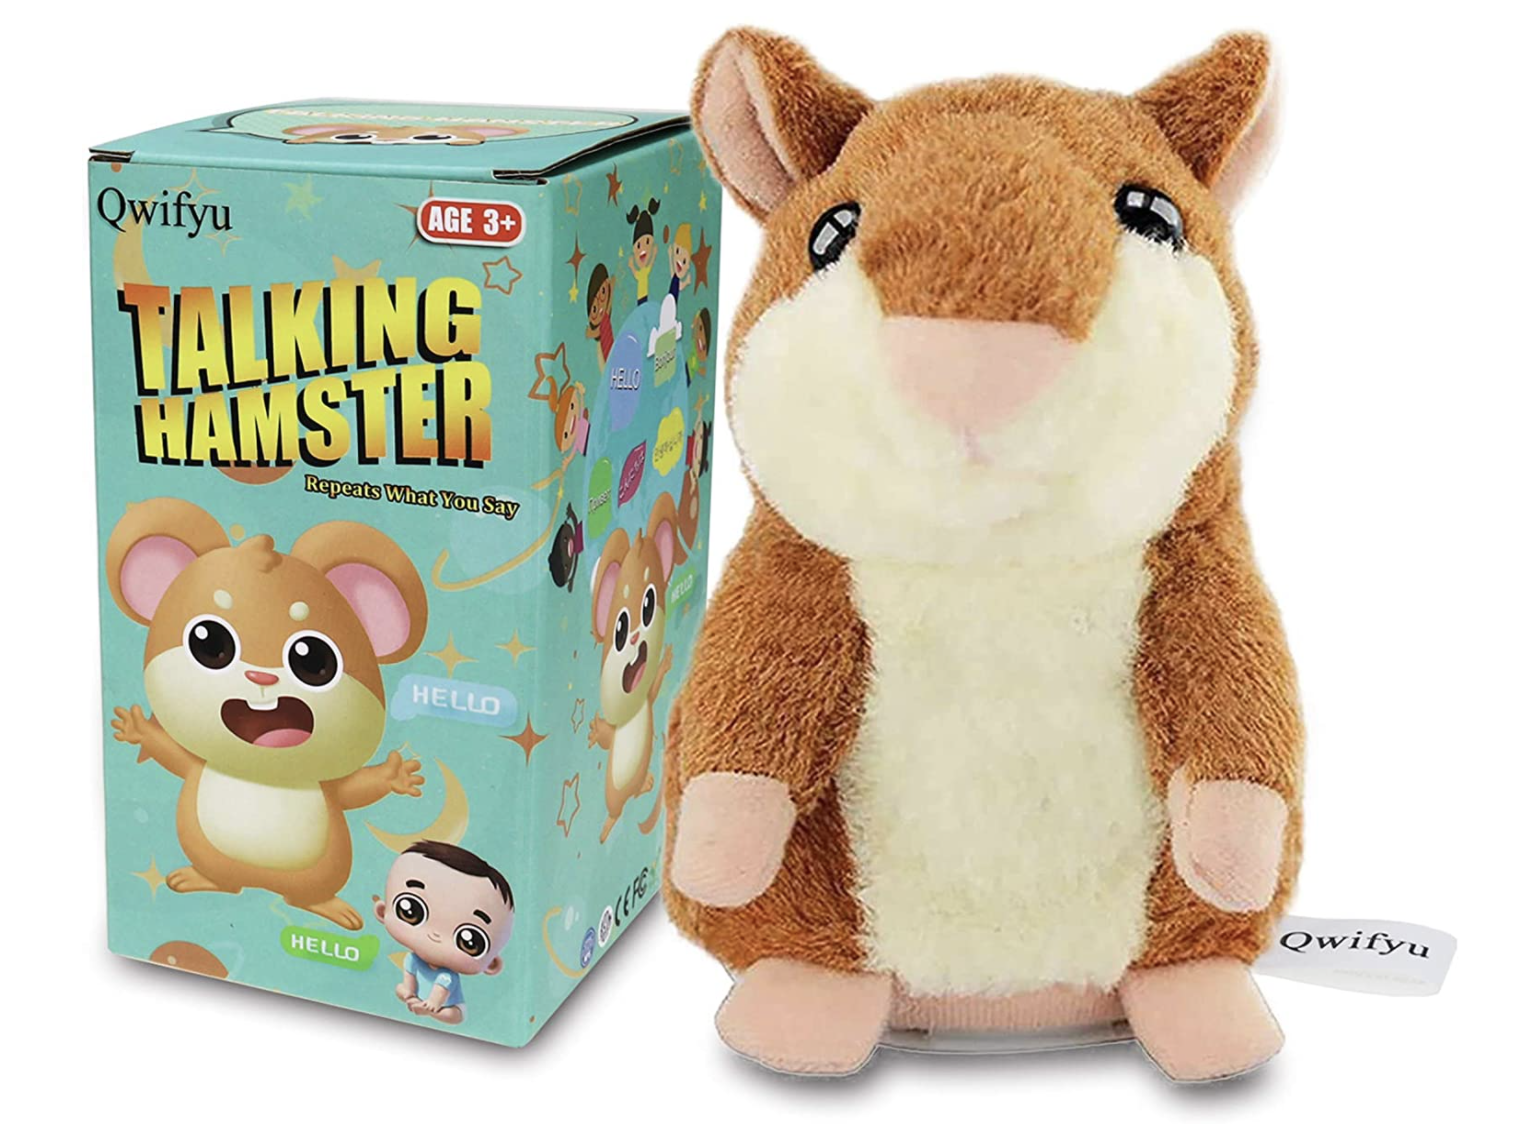 The talking hamster looks like a cute stuffed animal next to its box